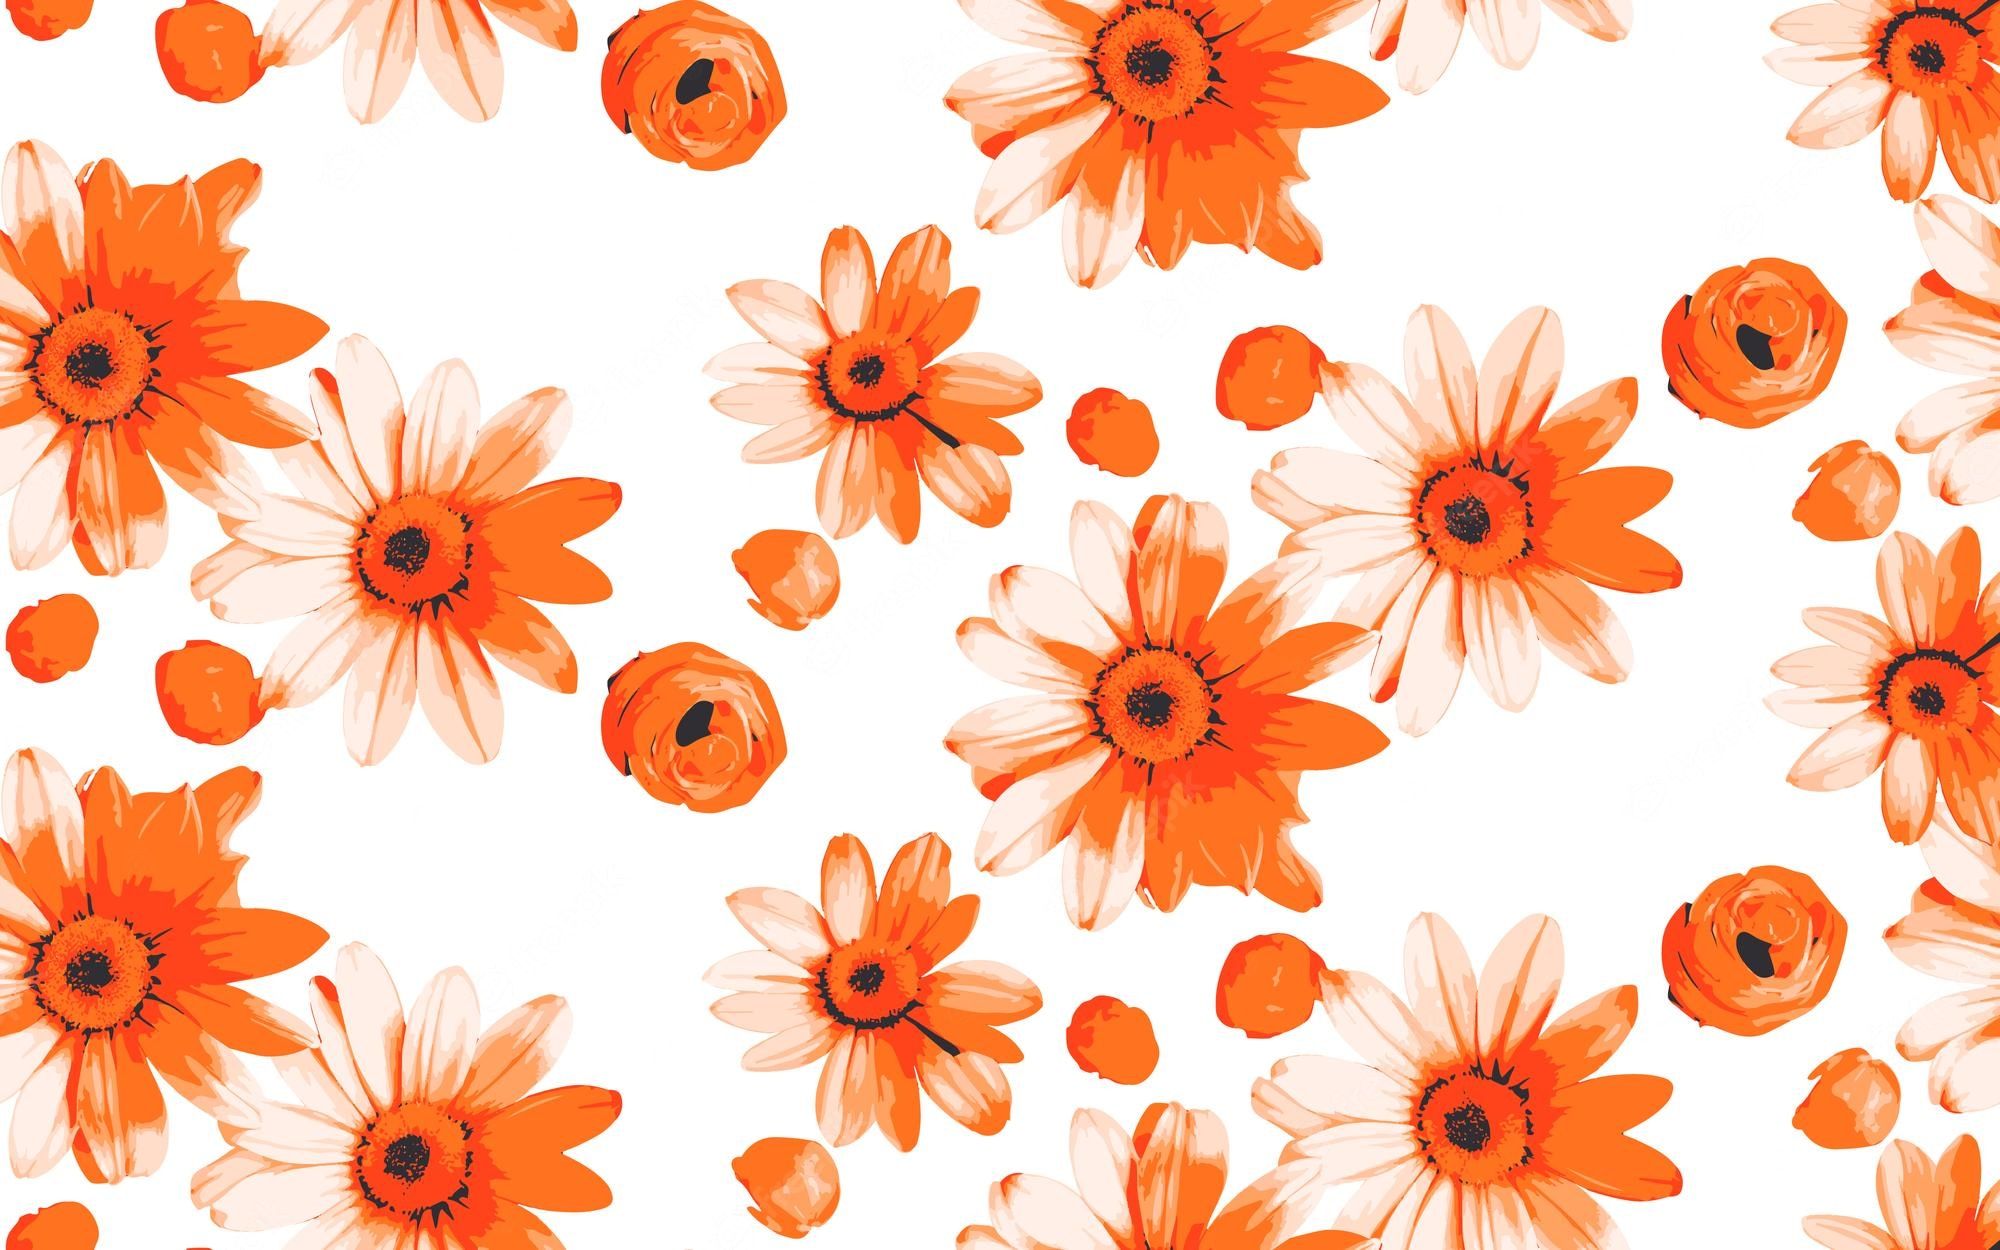 A pattern of orange flowers on white background - Orange